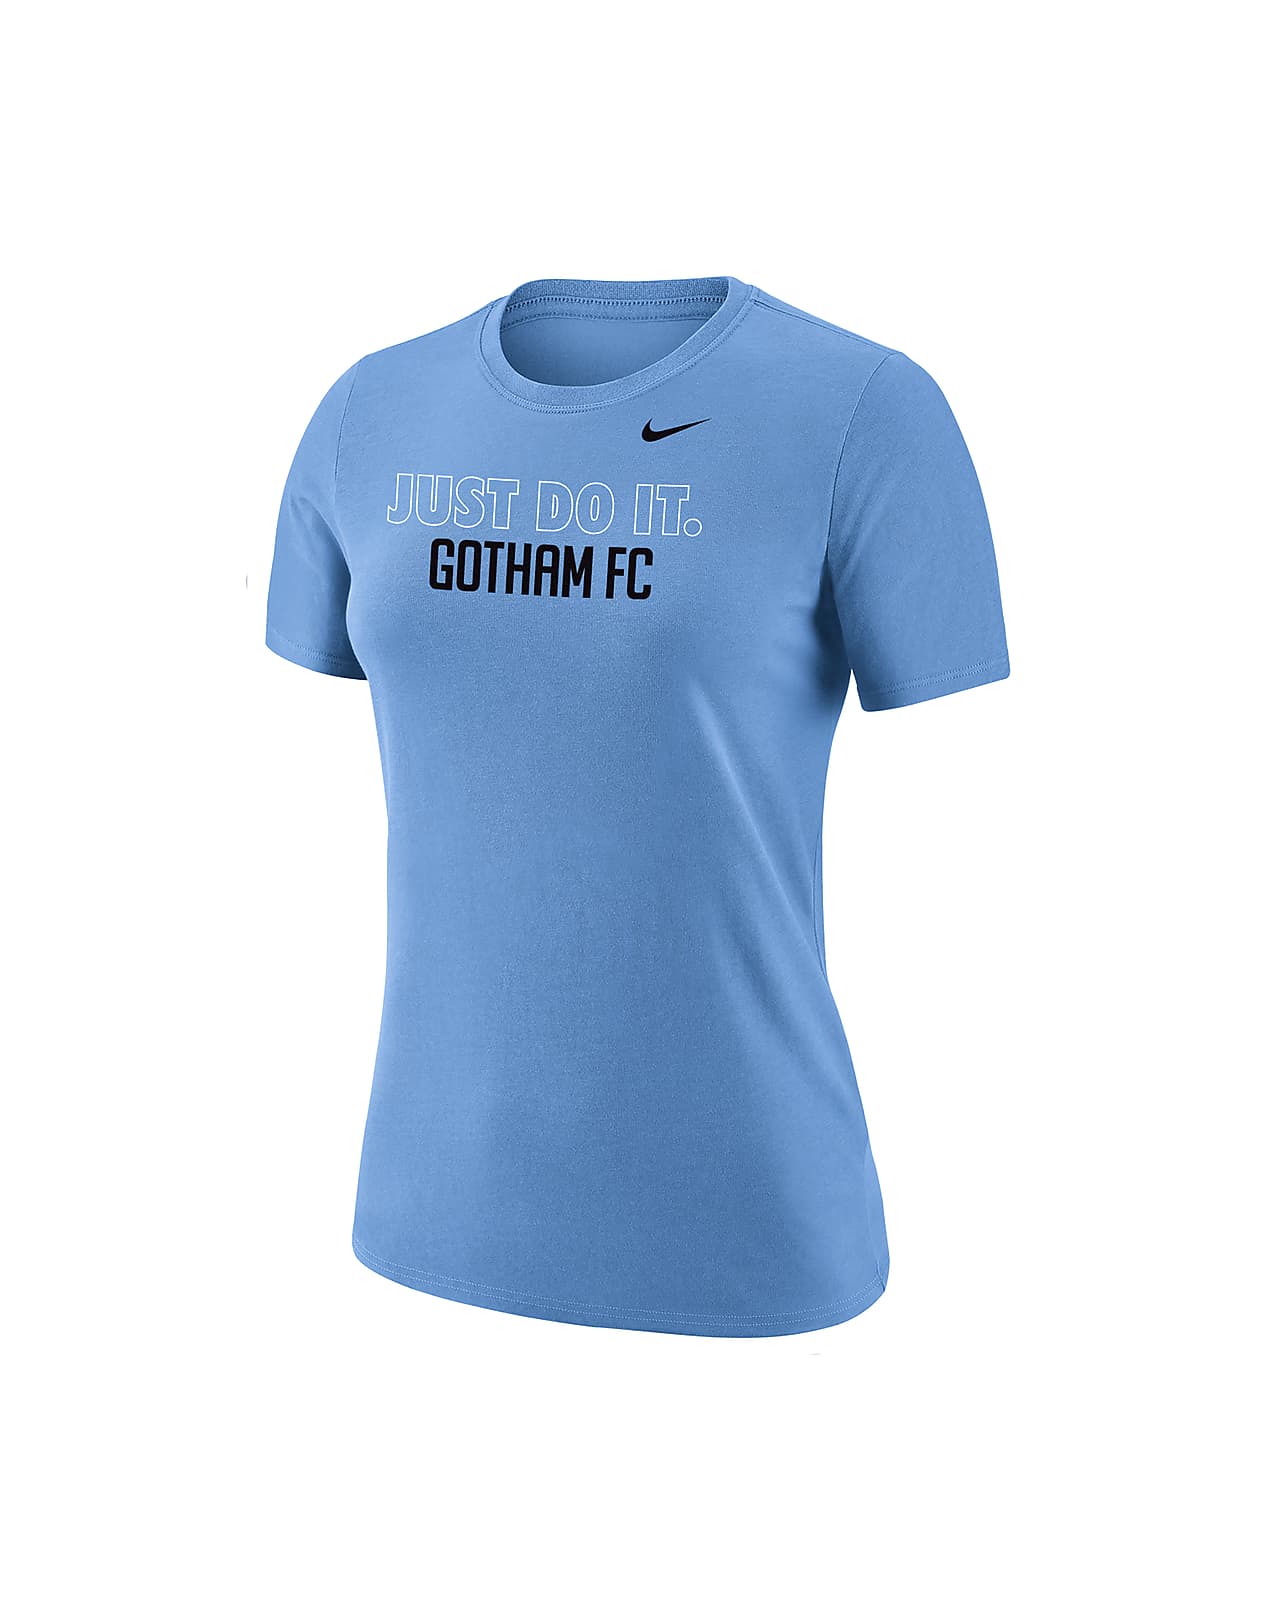 Gotham FC Women's Nike Soccer T-Shirt